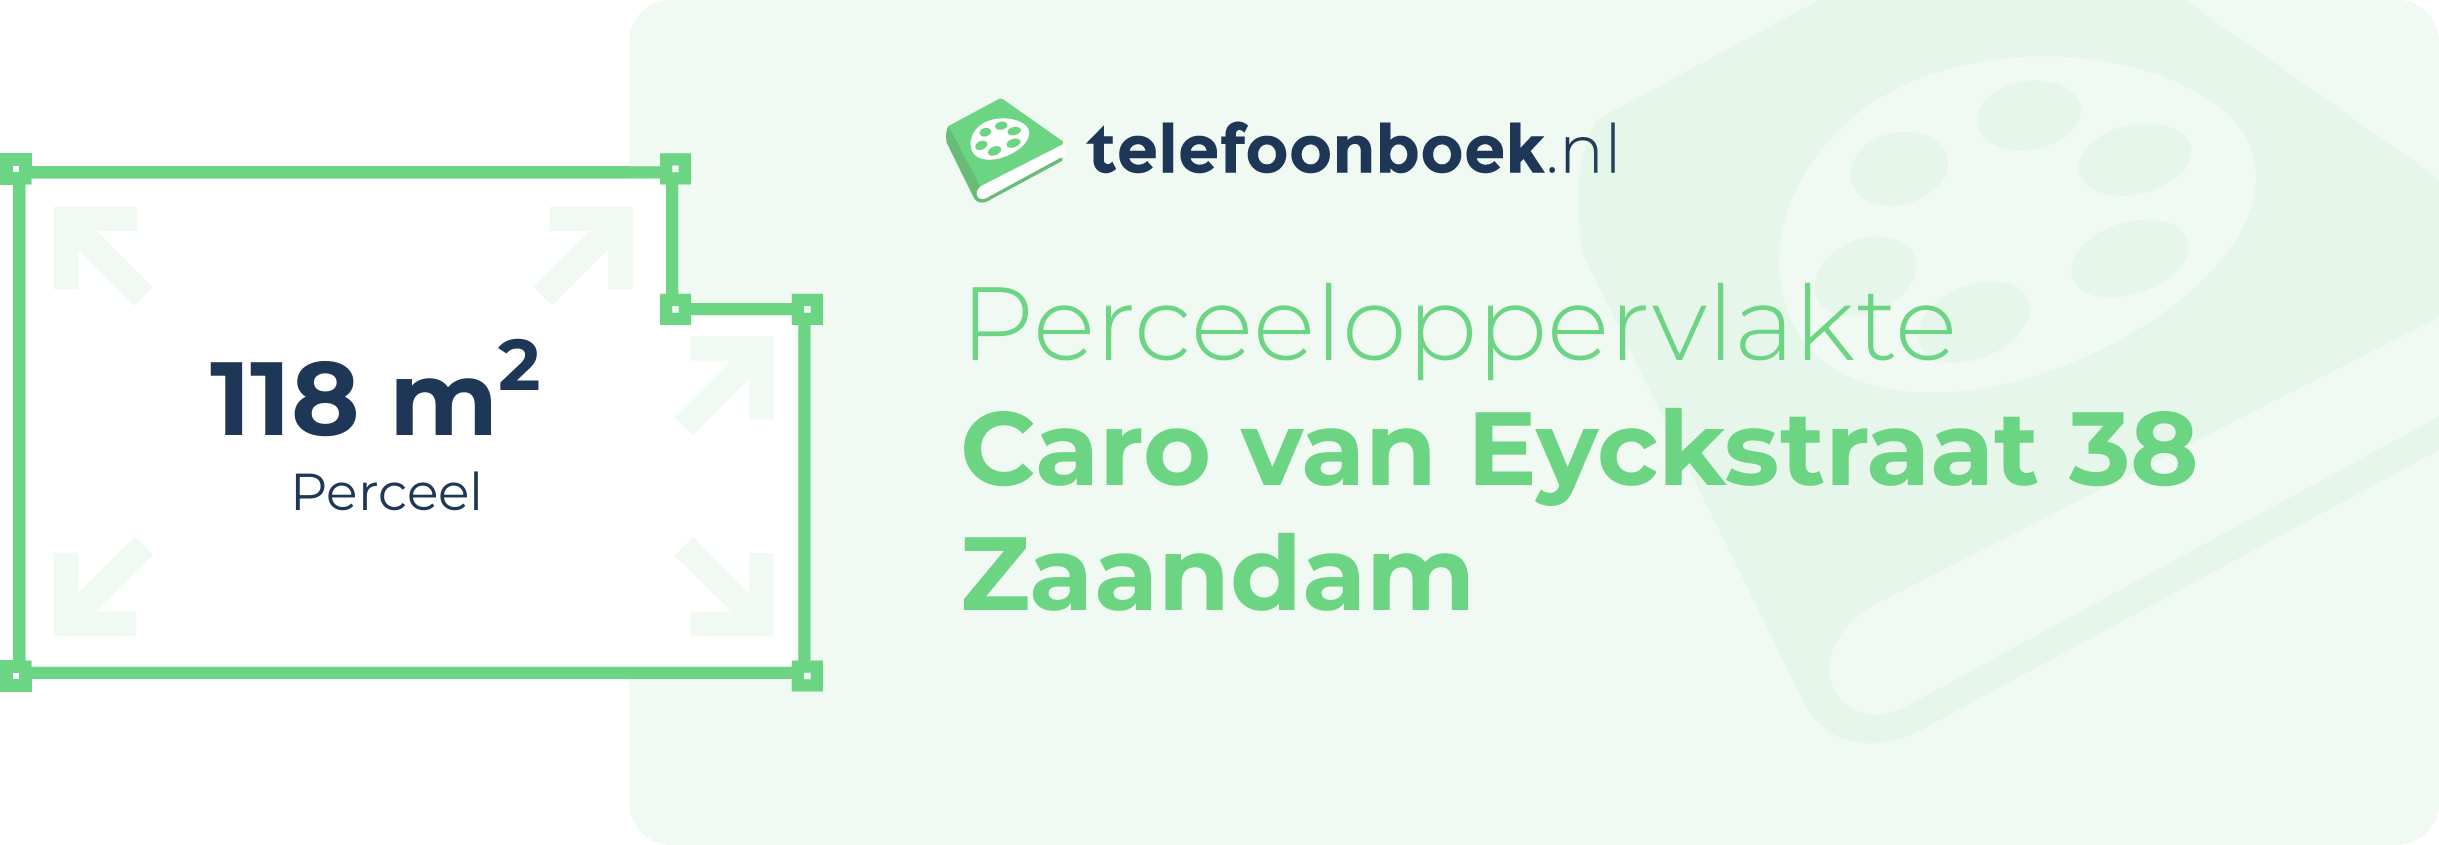 Perceeloppervlakte Caro Van Eyckstraat 38 Zaandam